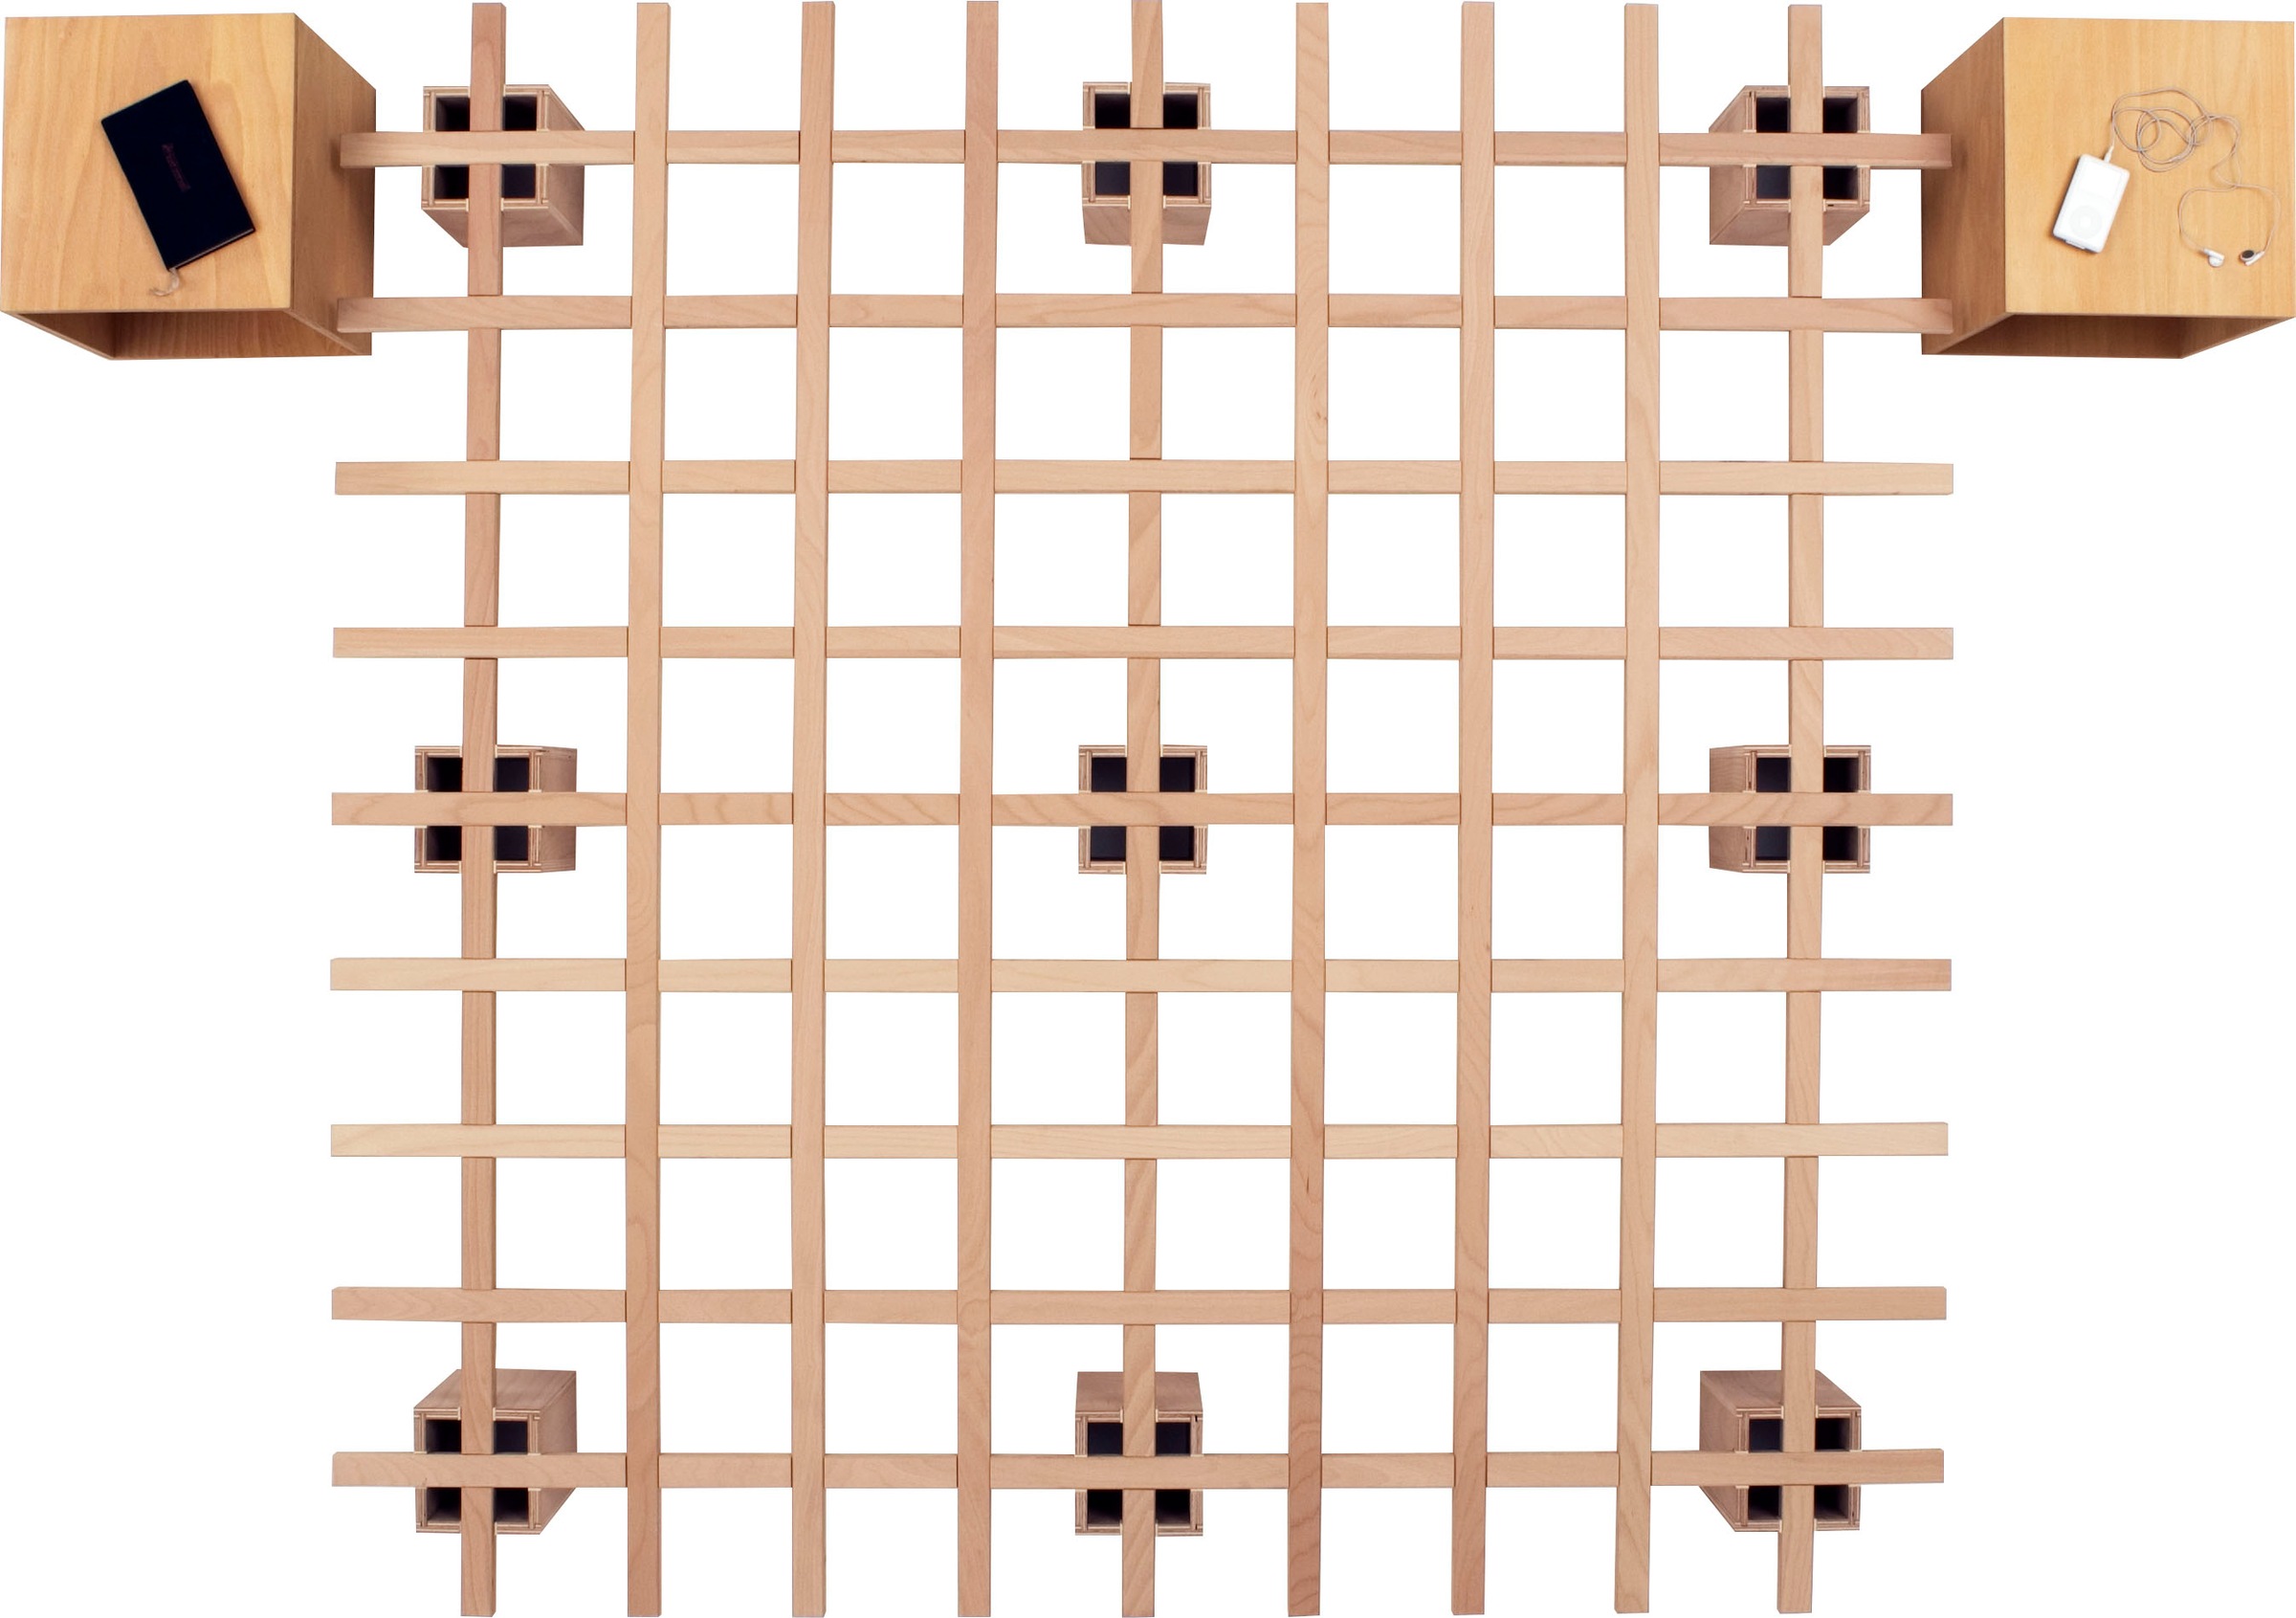 Tojo Beistelltisch »Tojo-cube«, aus Buche Multiplex, geölt, Maße (35/35/35 cm)